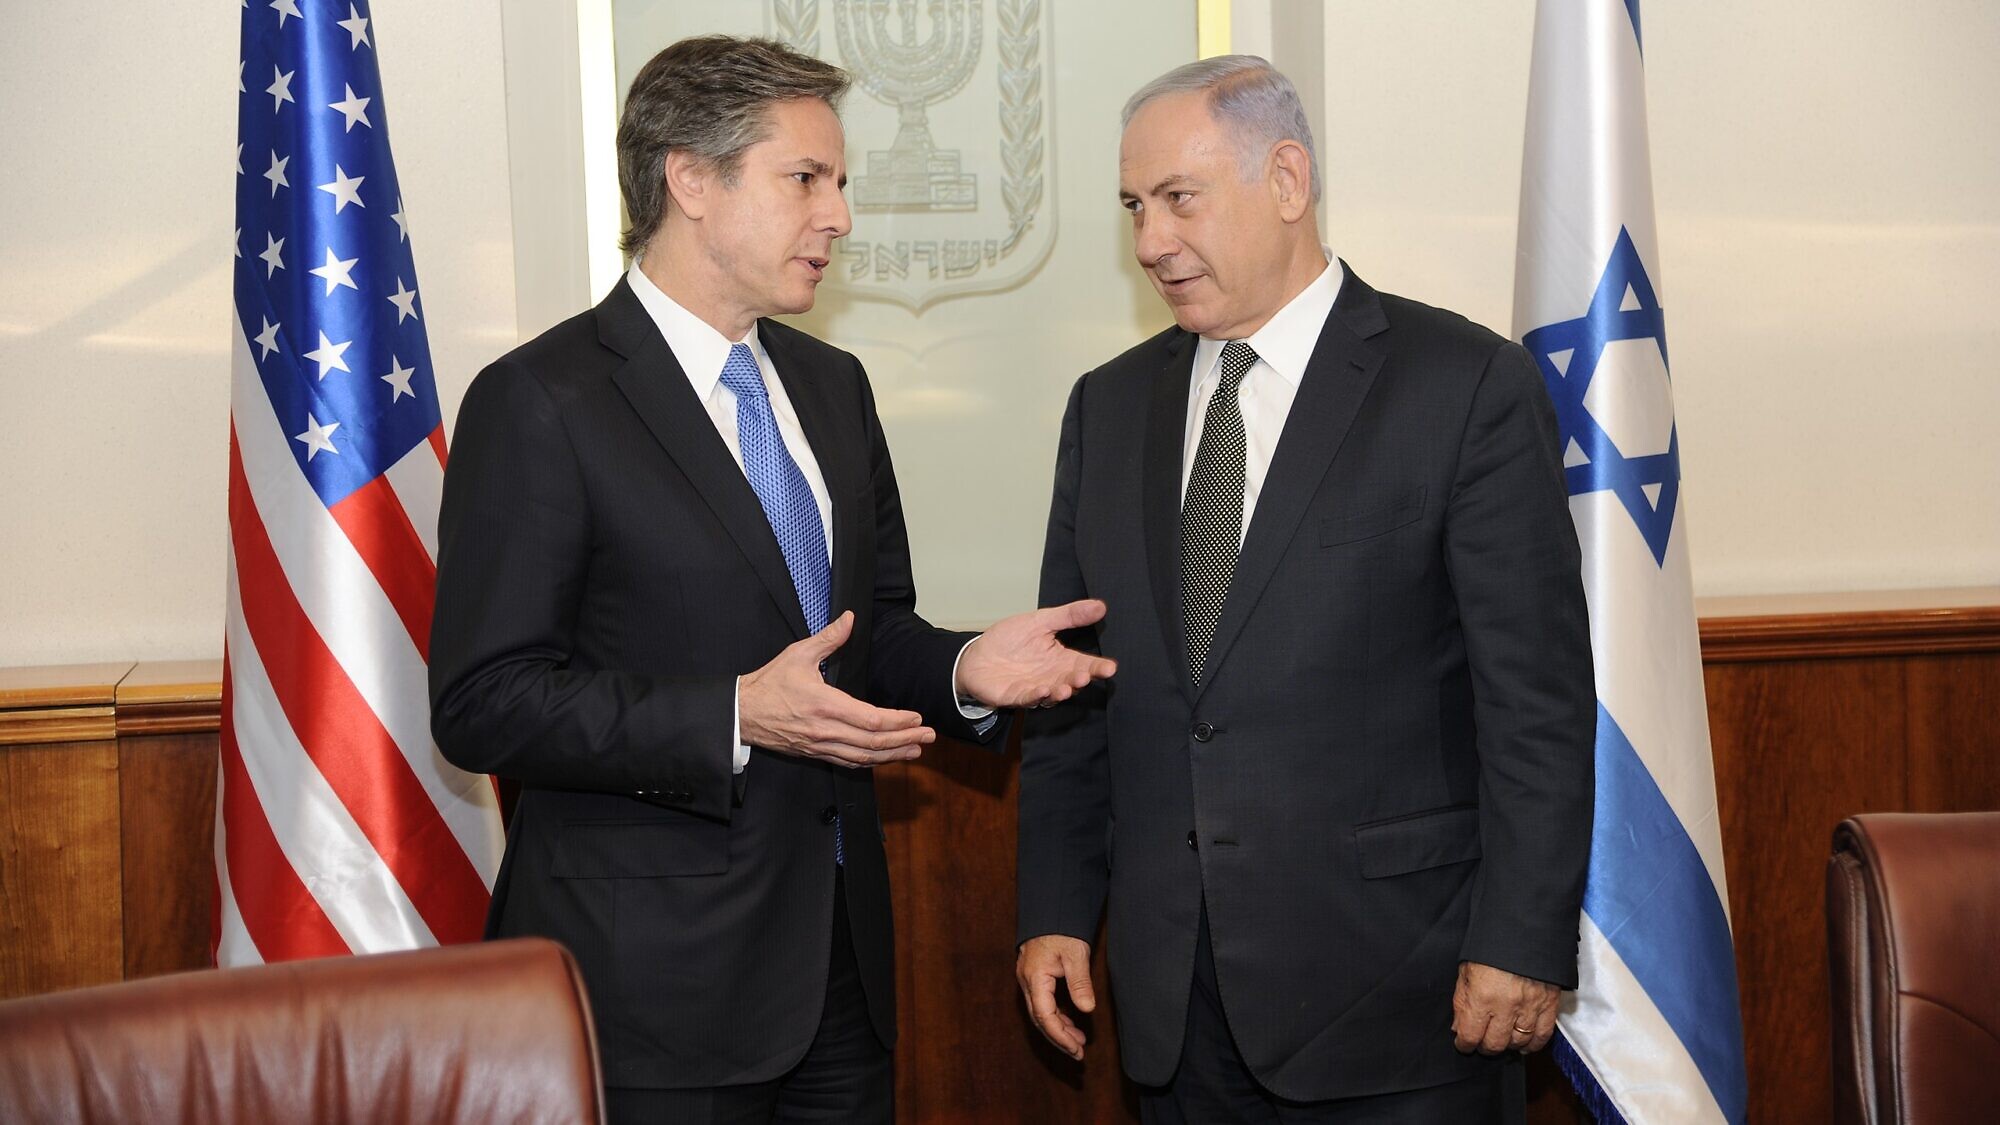 Blinken congratulates Netanyahu on new Israeli government - JNS.org